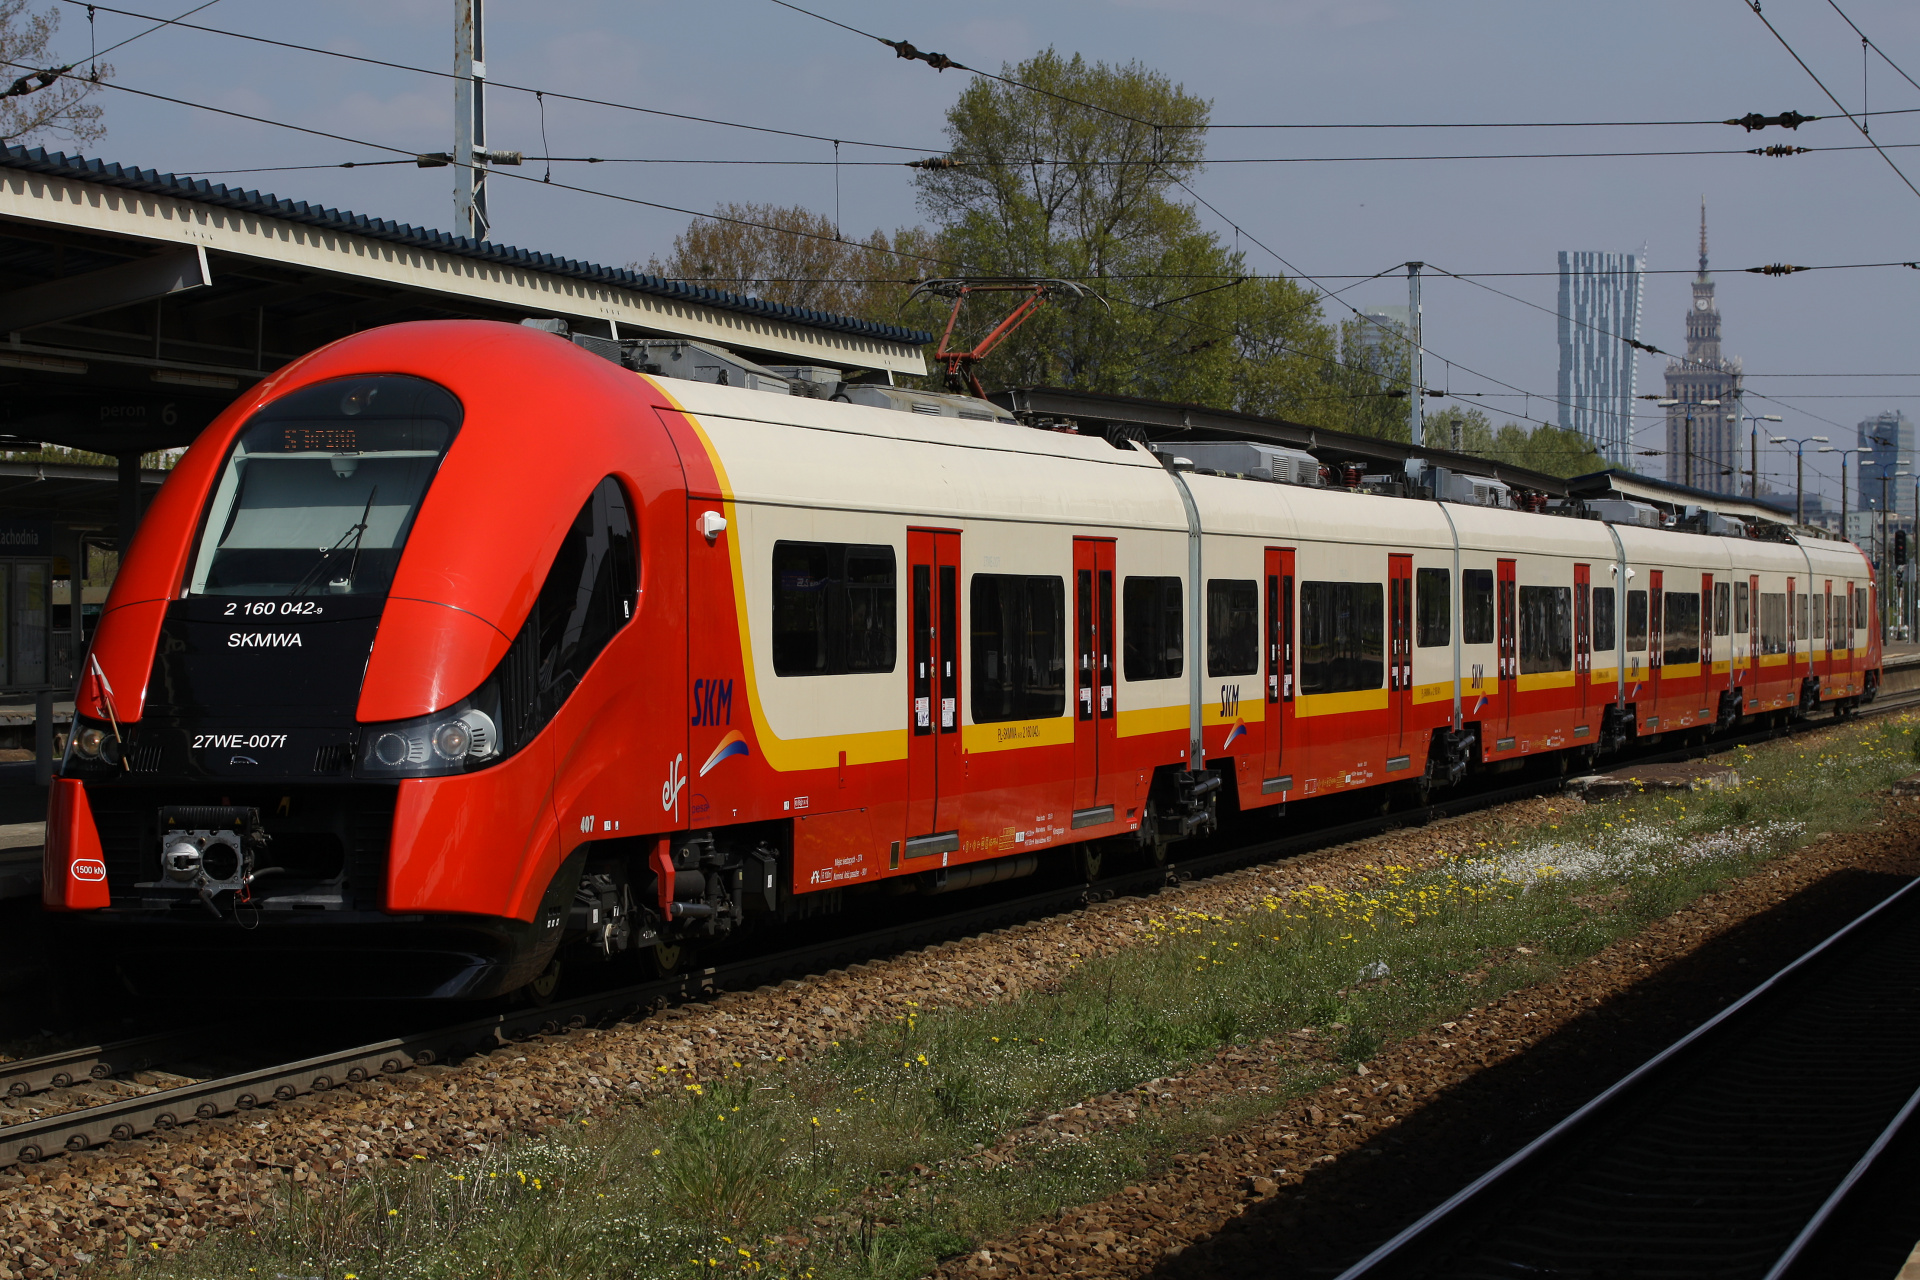 27WE-007 (Vehicles » Trains and Locomotives » Pesa ELF)